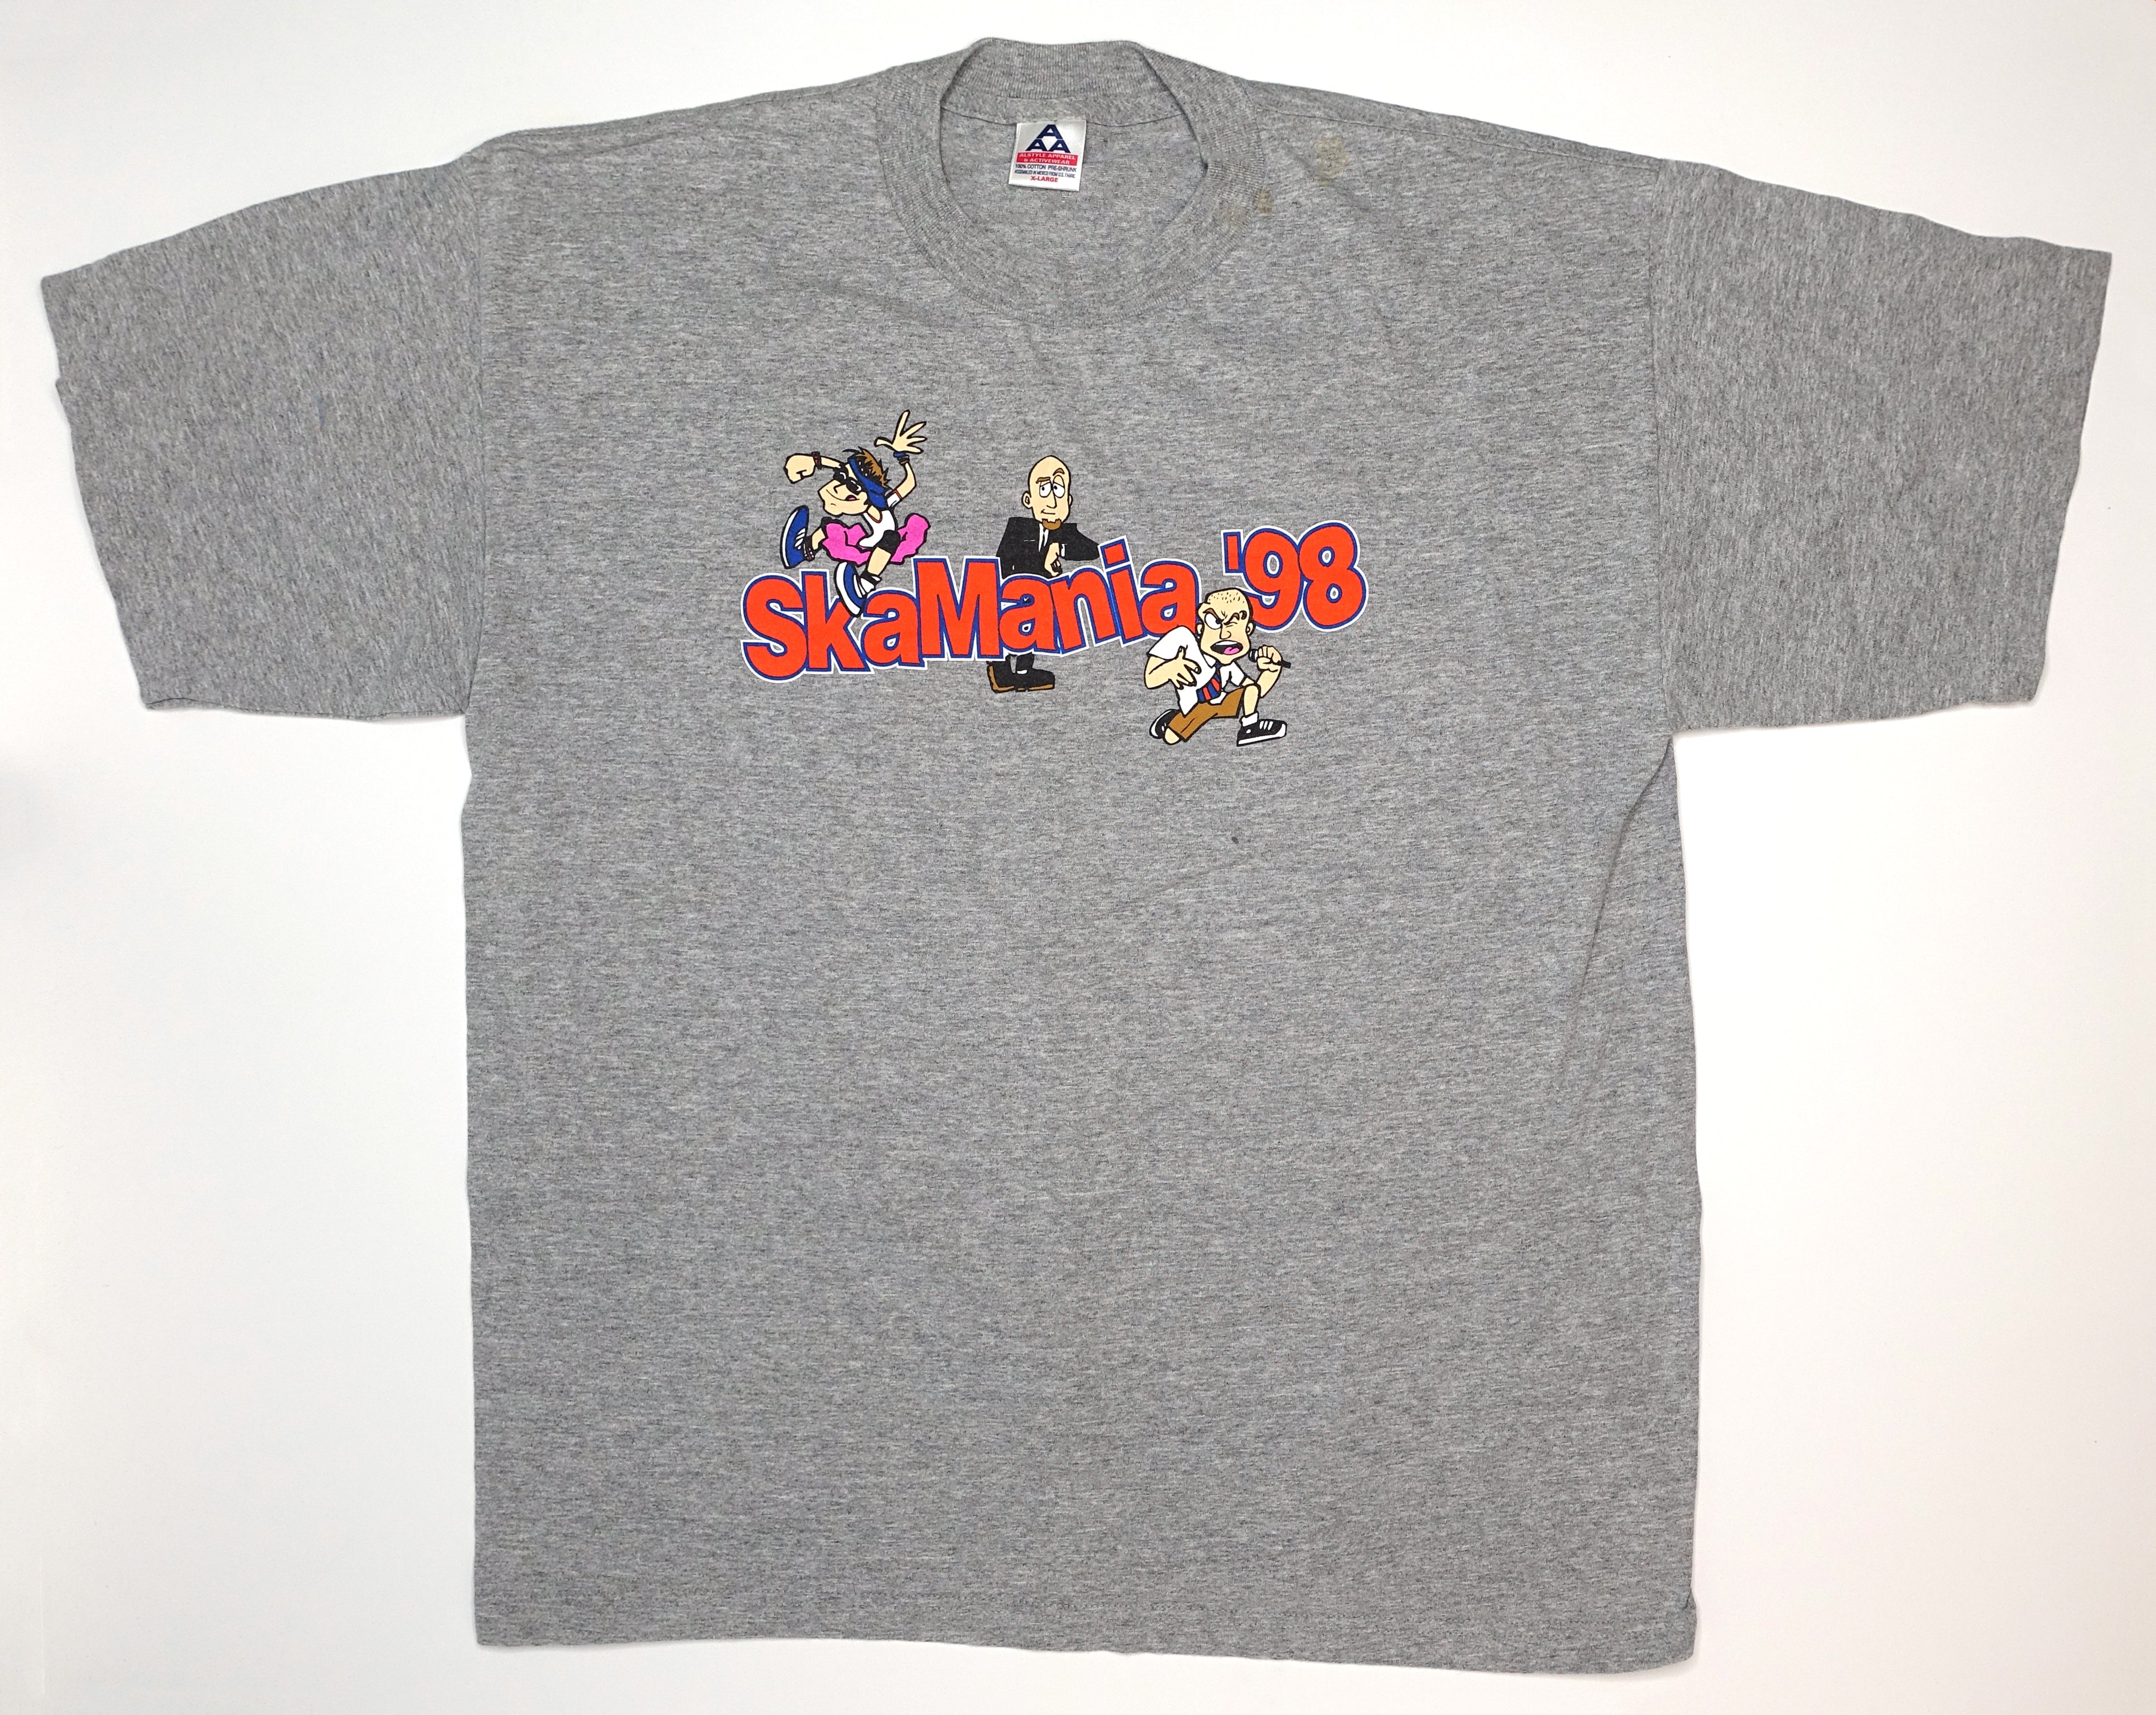 Five Iron Frenzy / Insyderz / O.C. Supertones – SkaMania '98 Tour Shirt Size XL